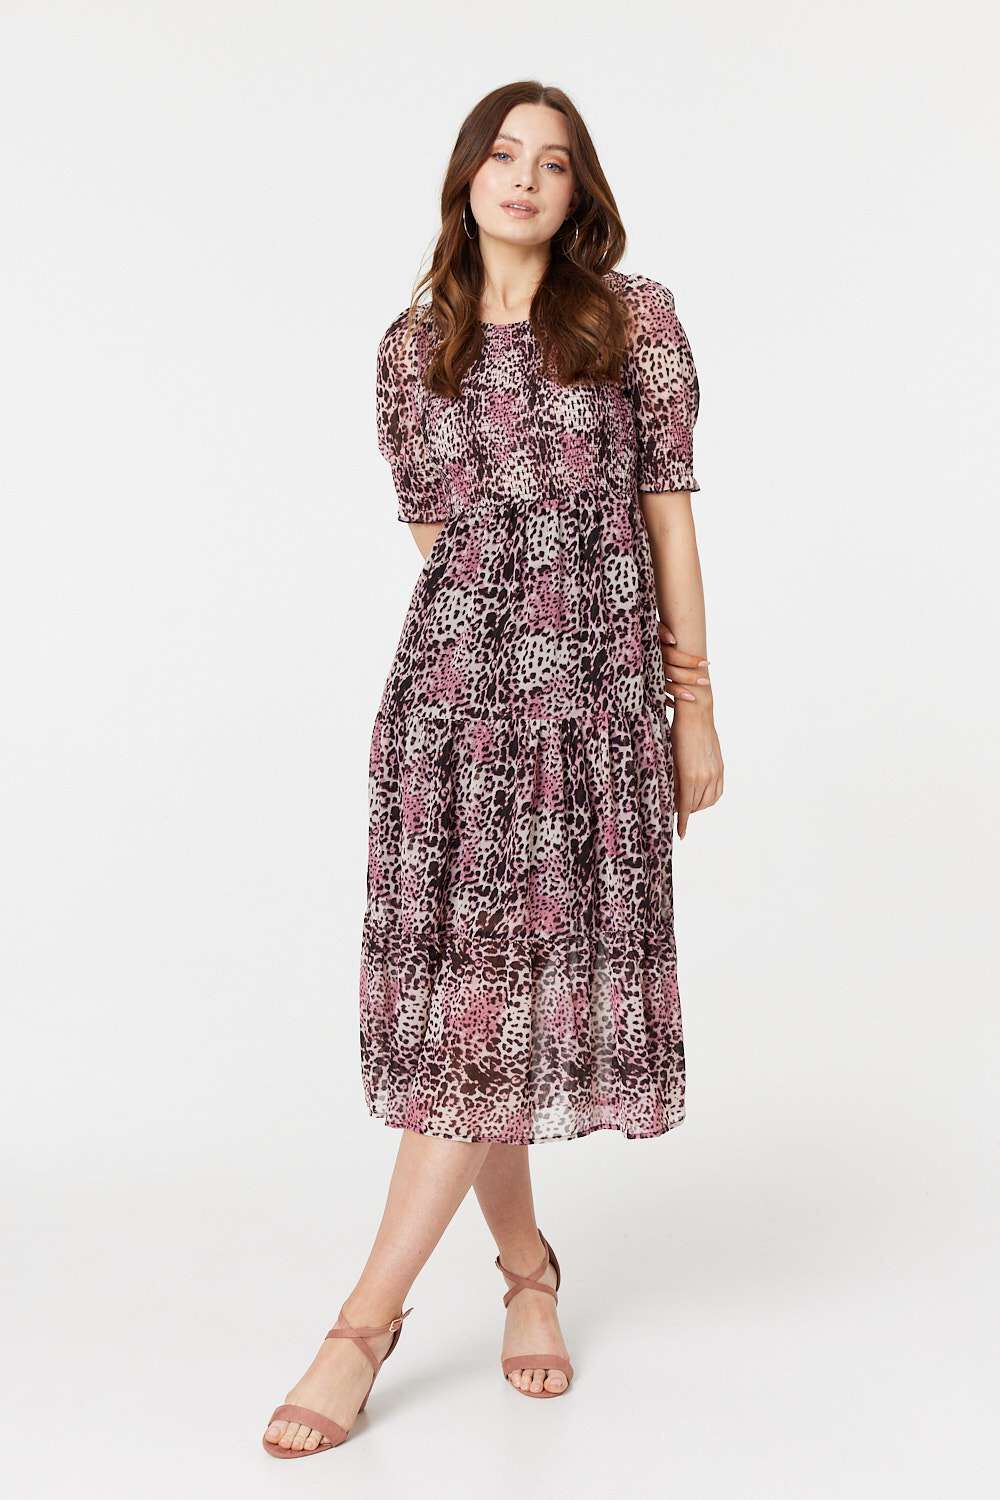 Izabel London Pink - Animal Print Midi Smock Dress, Size: 16